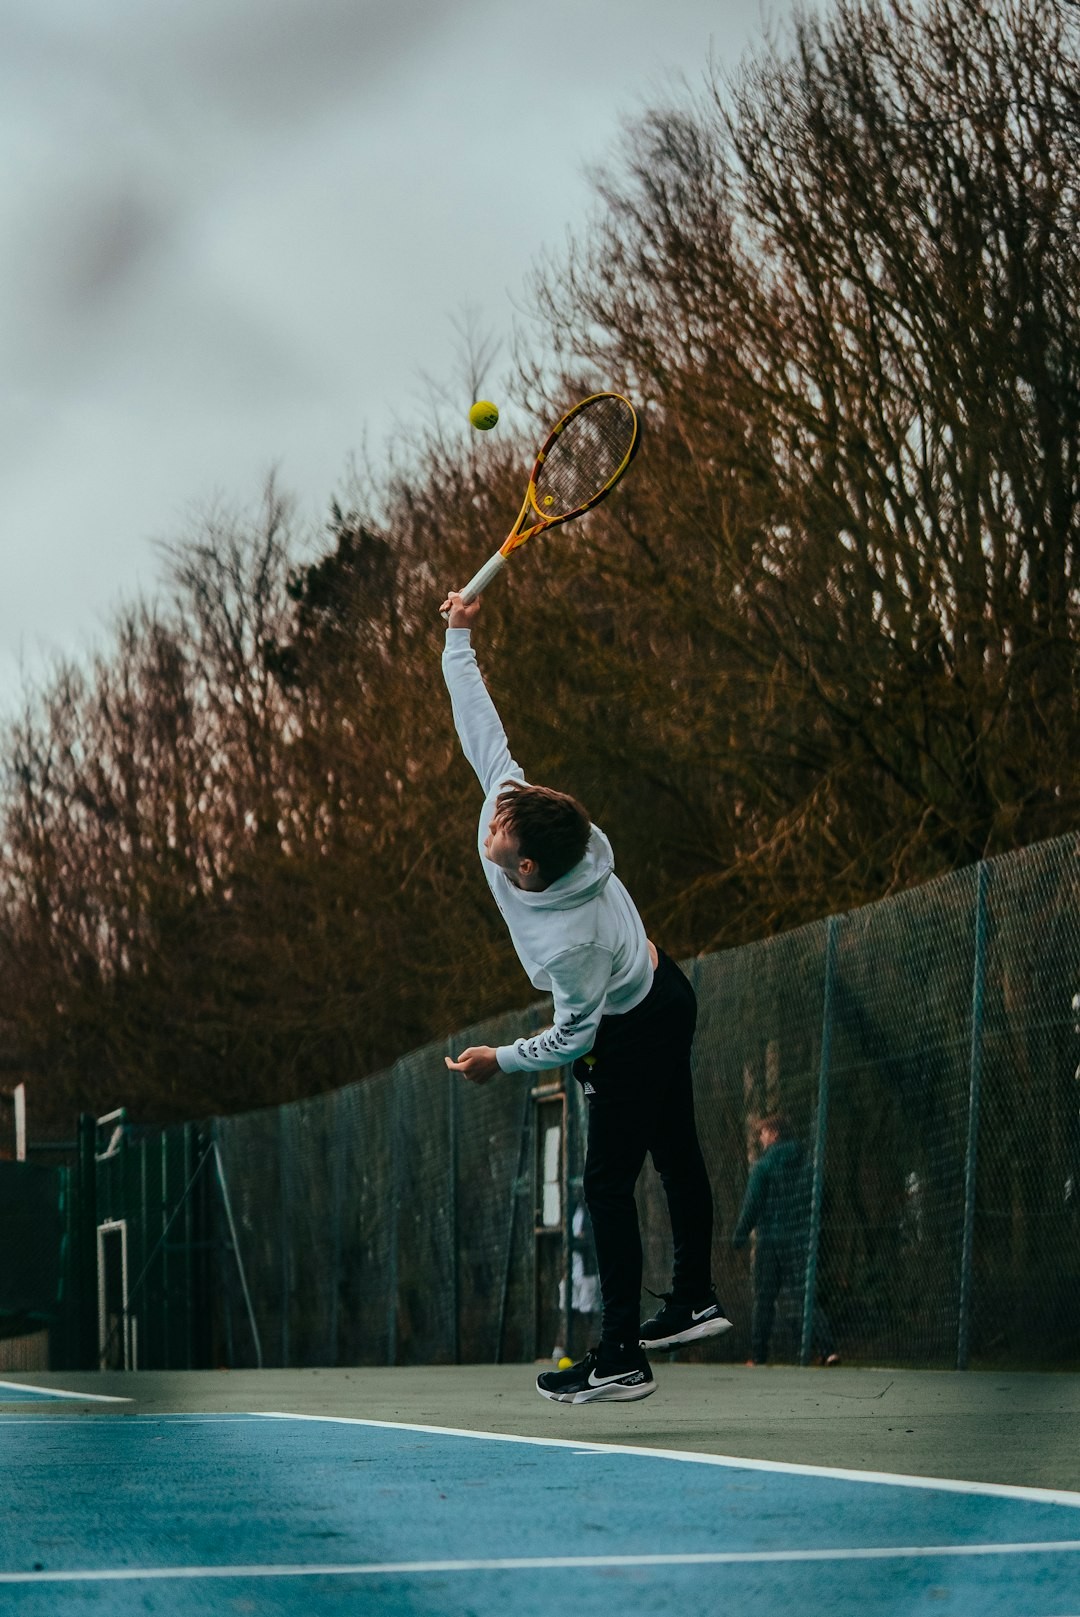 a man jumping up to hit a tennis ball